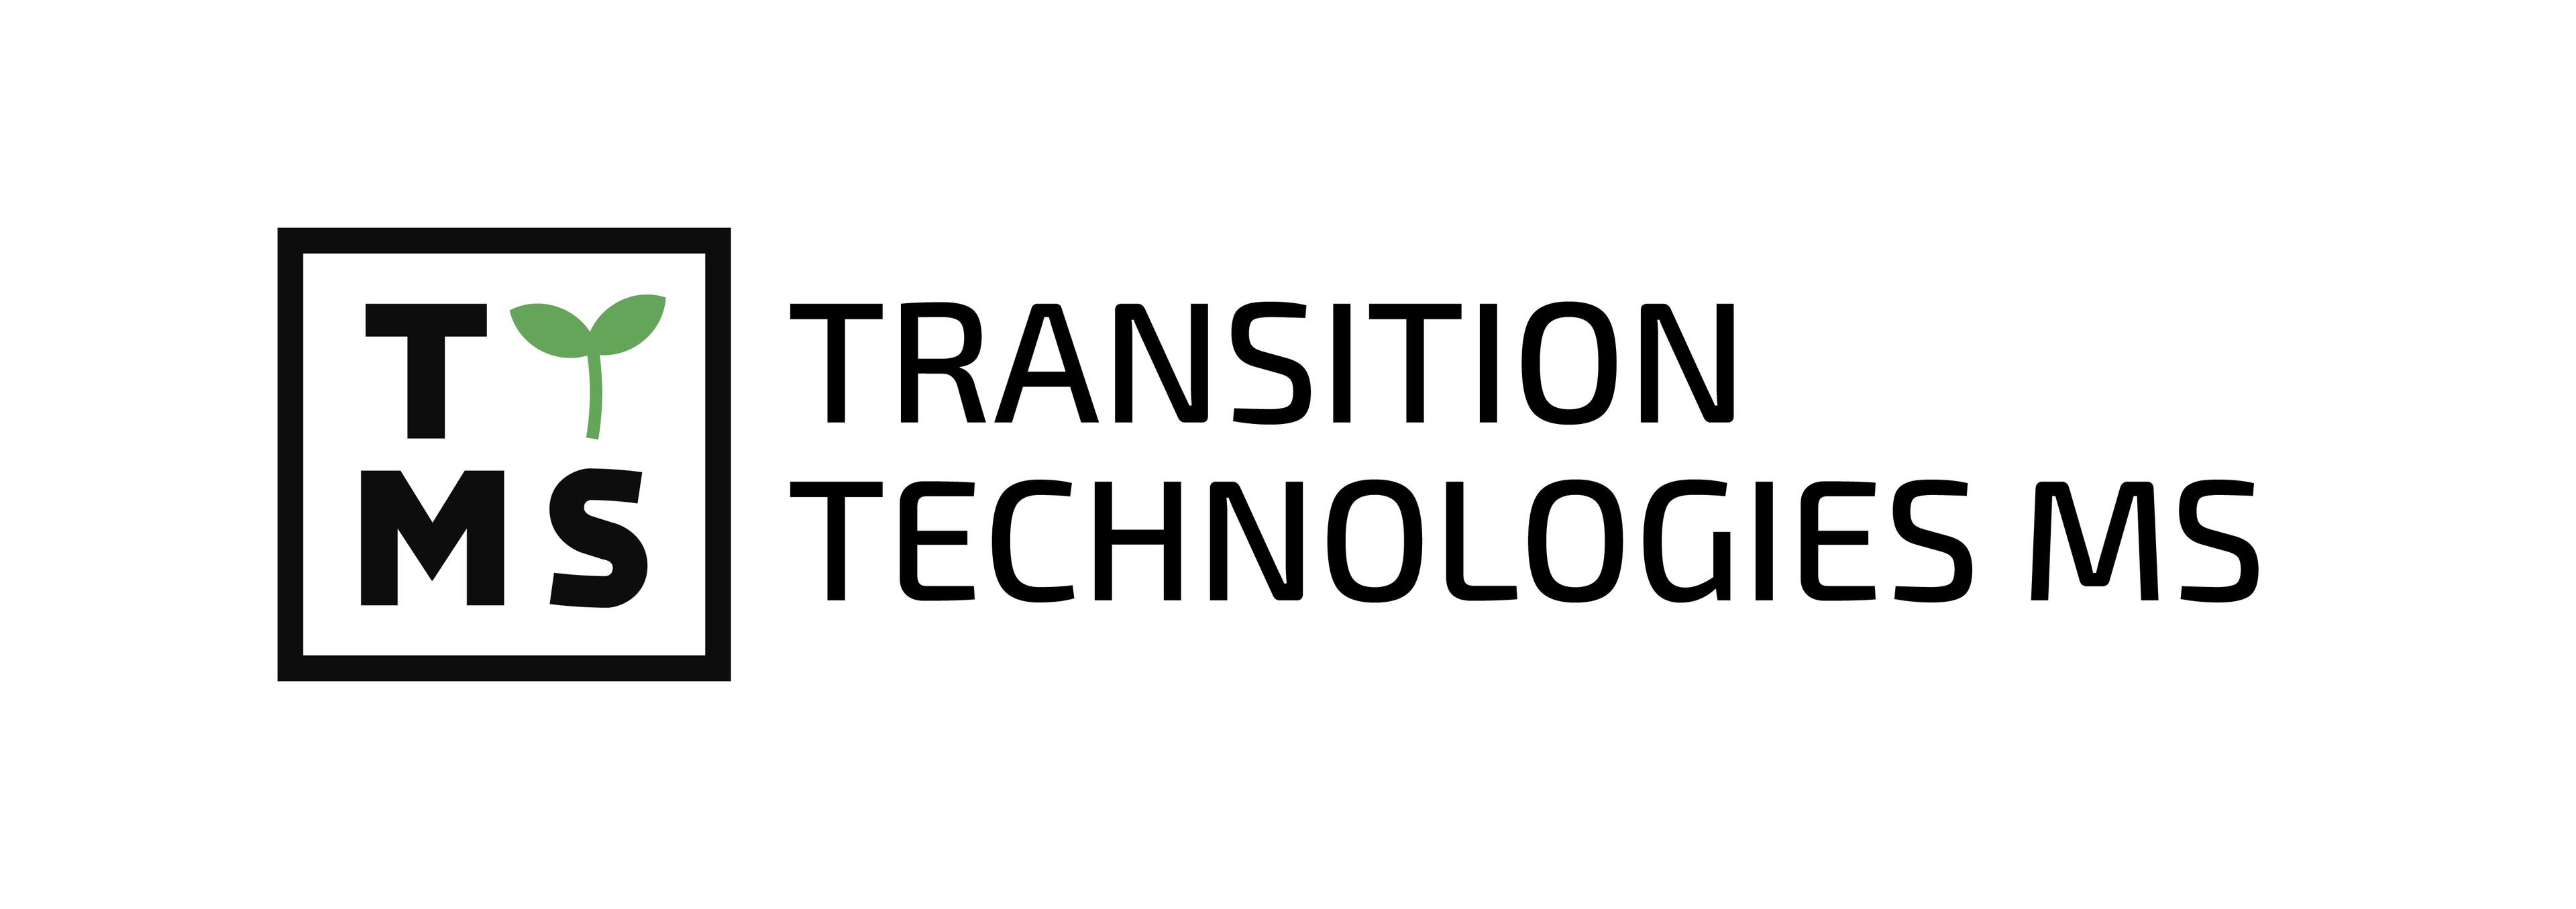 Transition Technologies MS